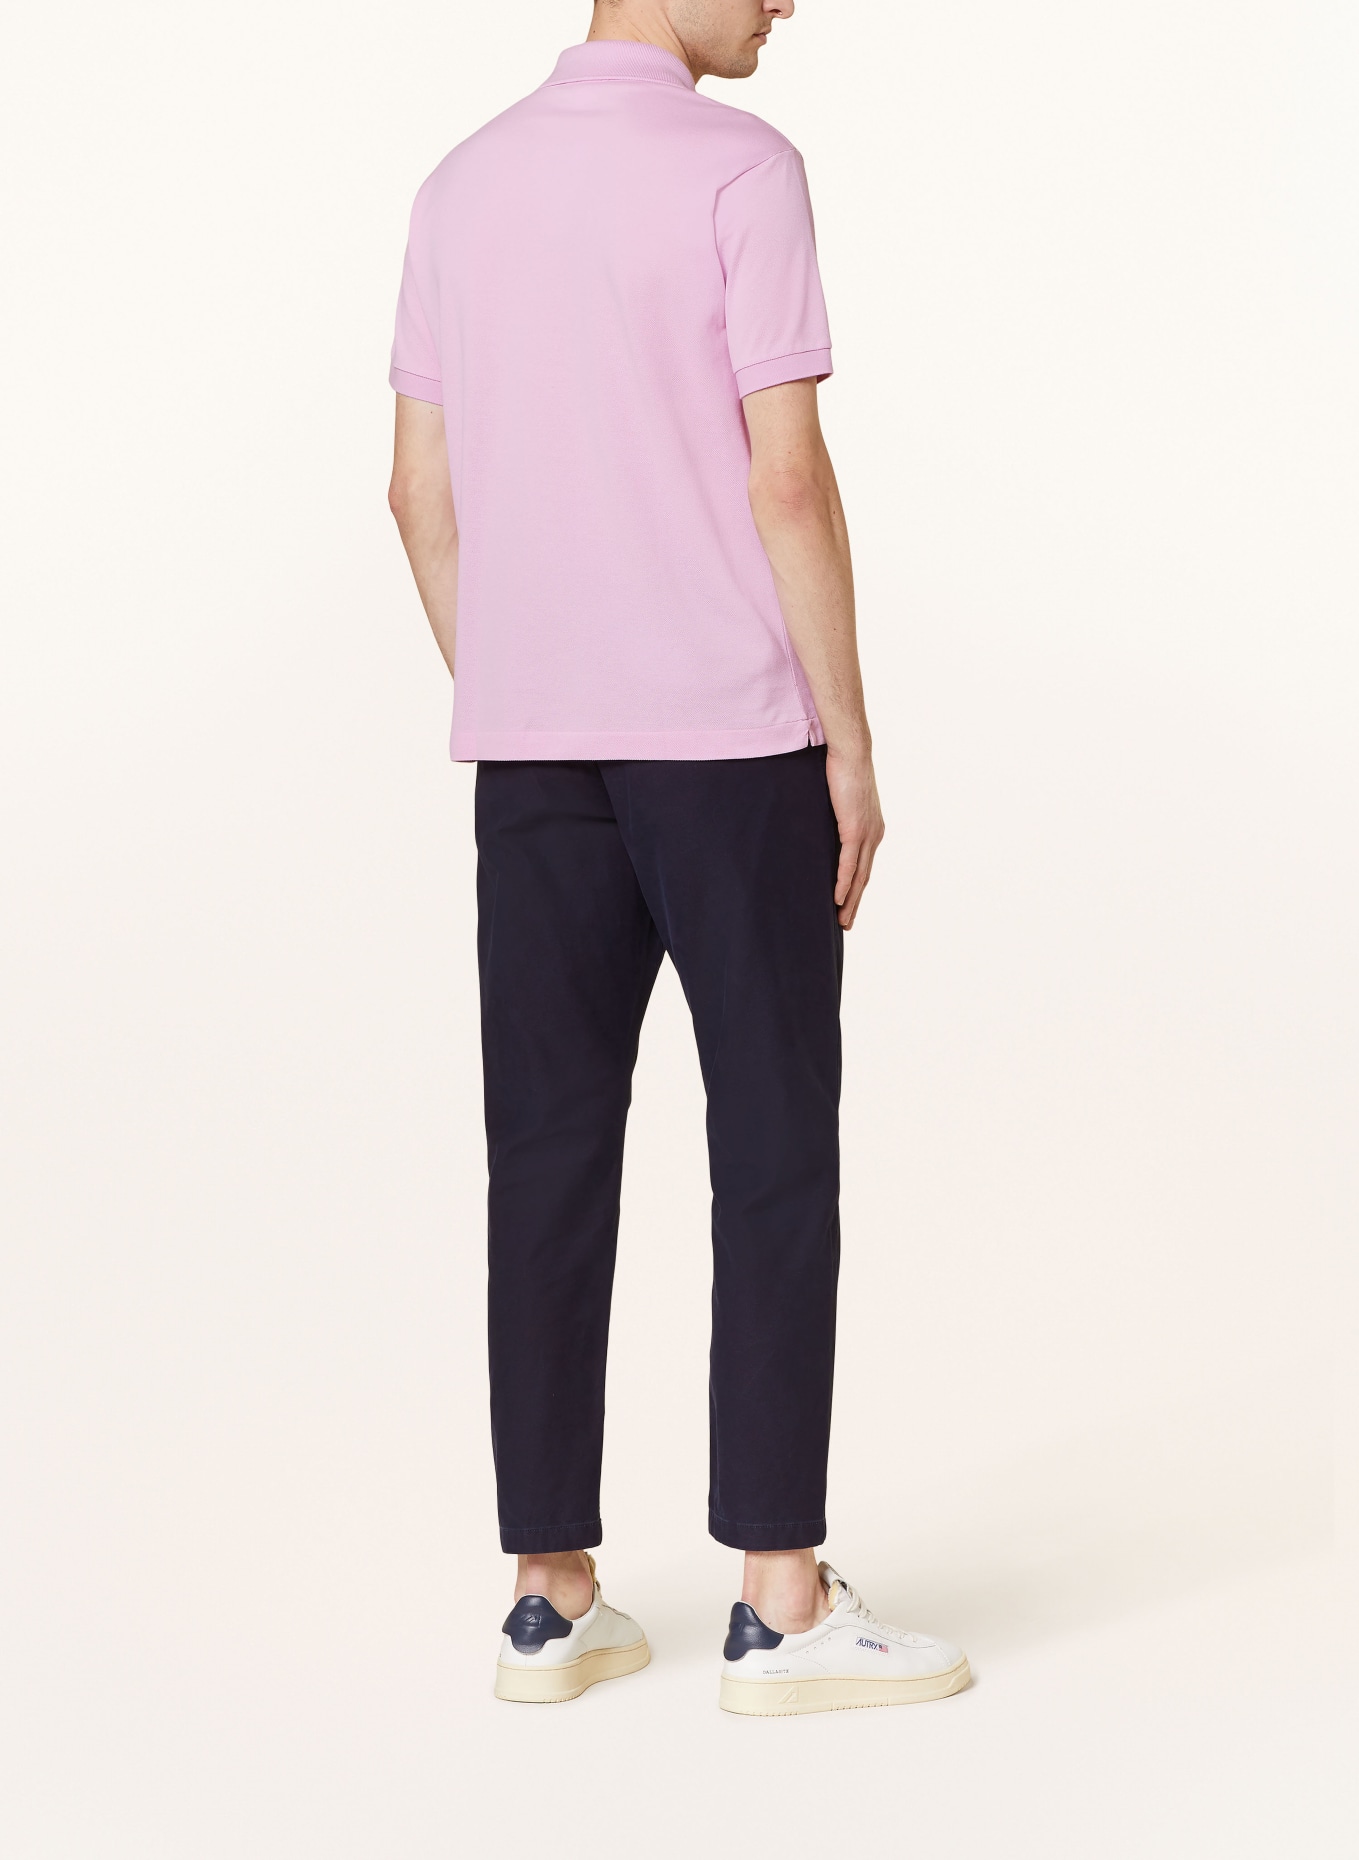 LACOSTE Piqué-Poloshirt Classic Fit, Farbe: ROSA (Bild 3)